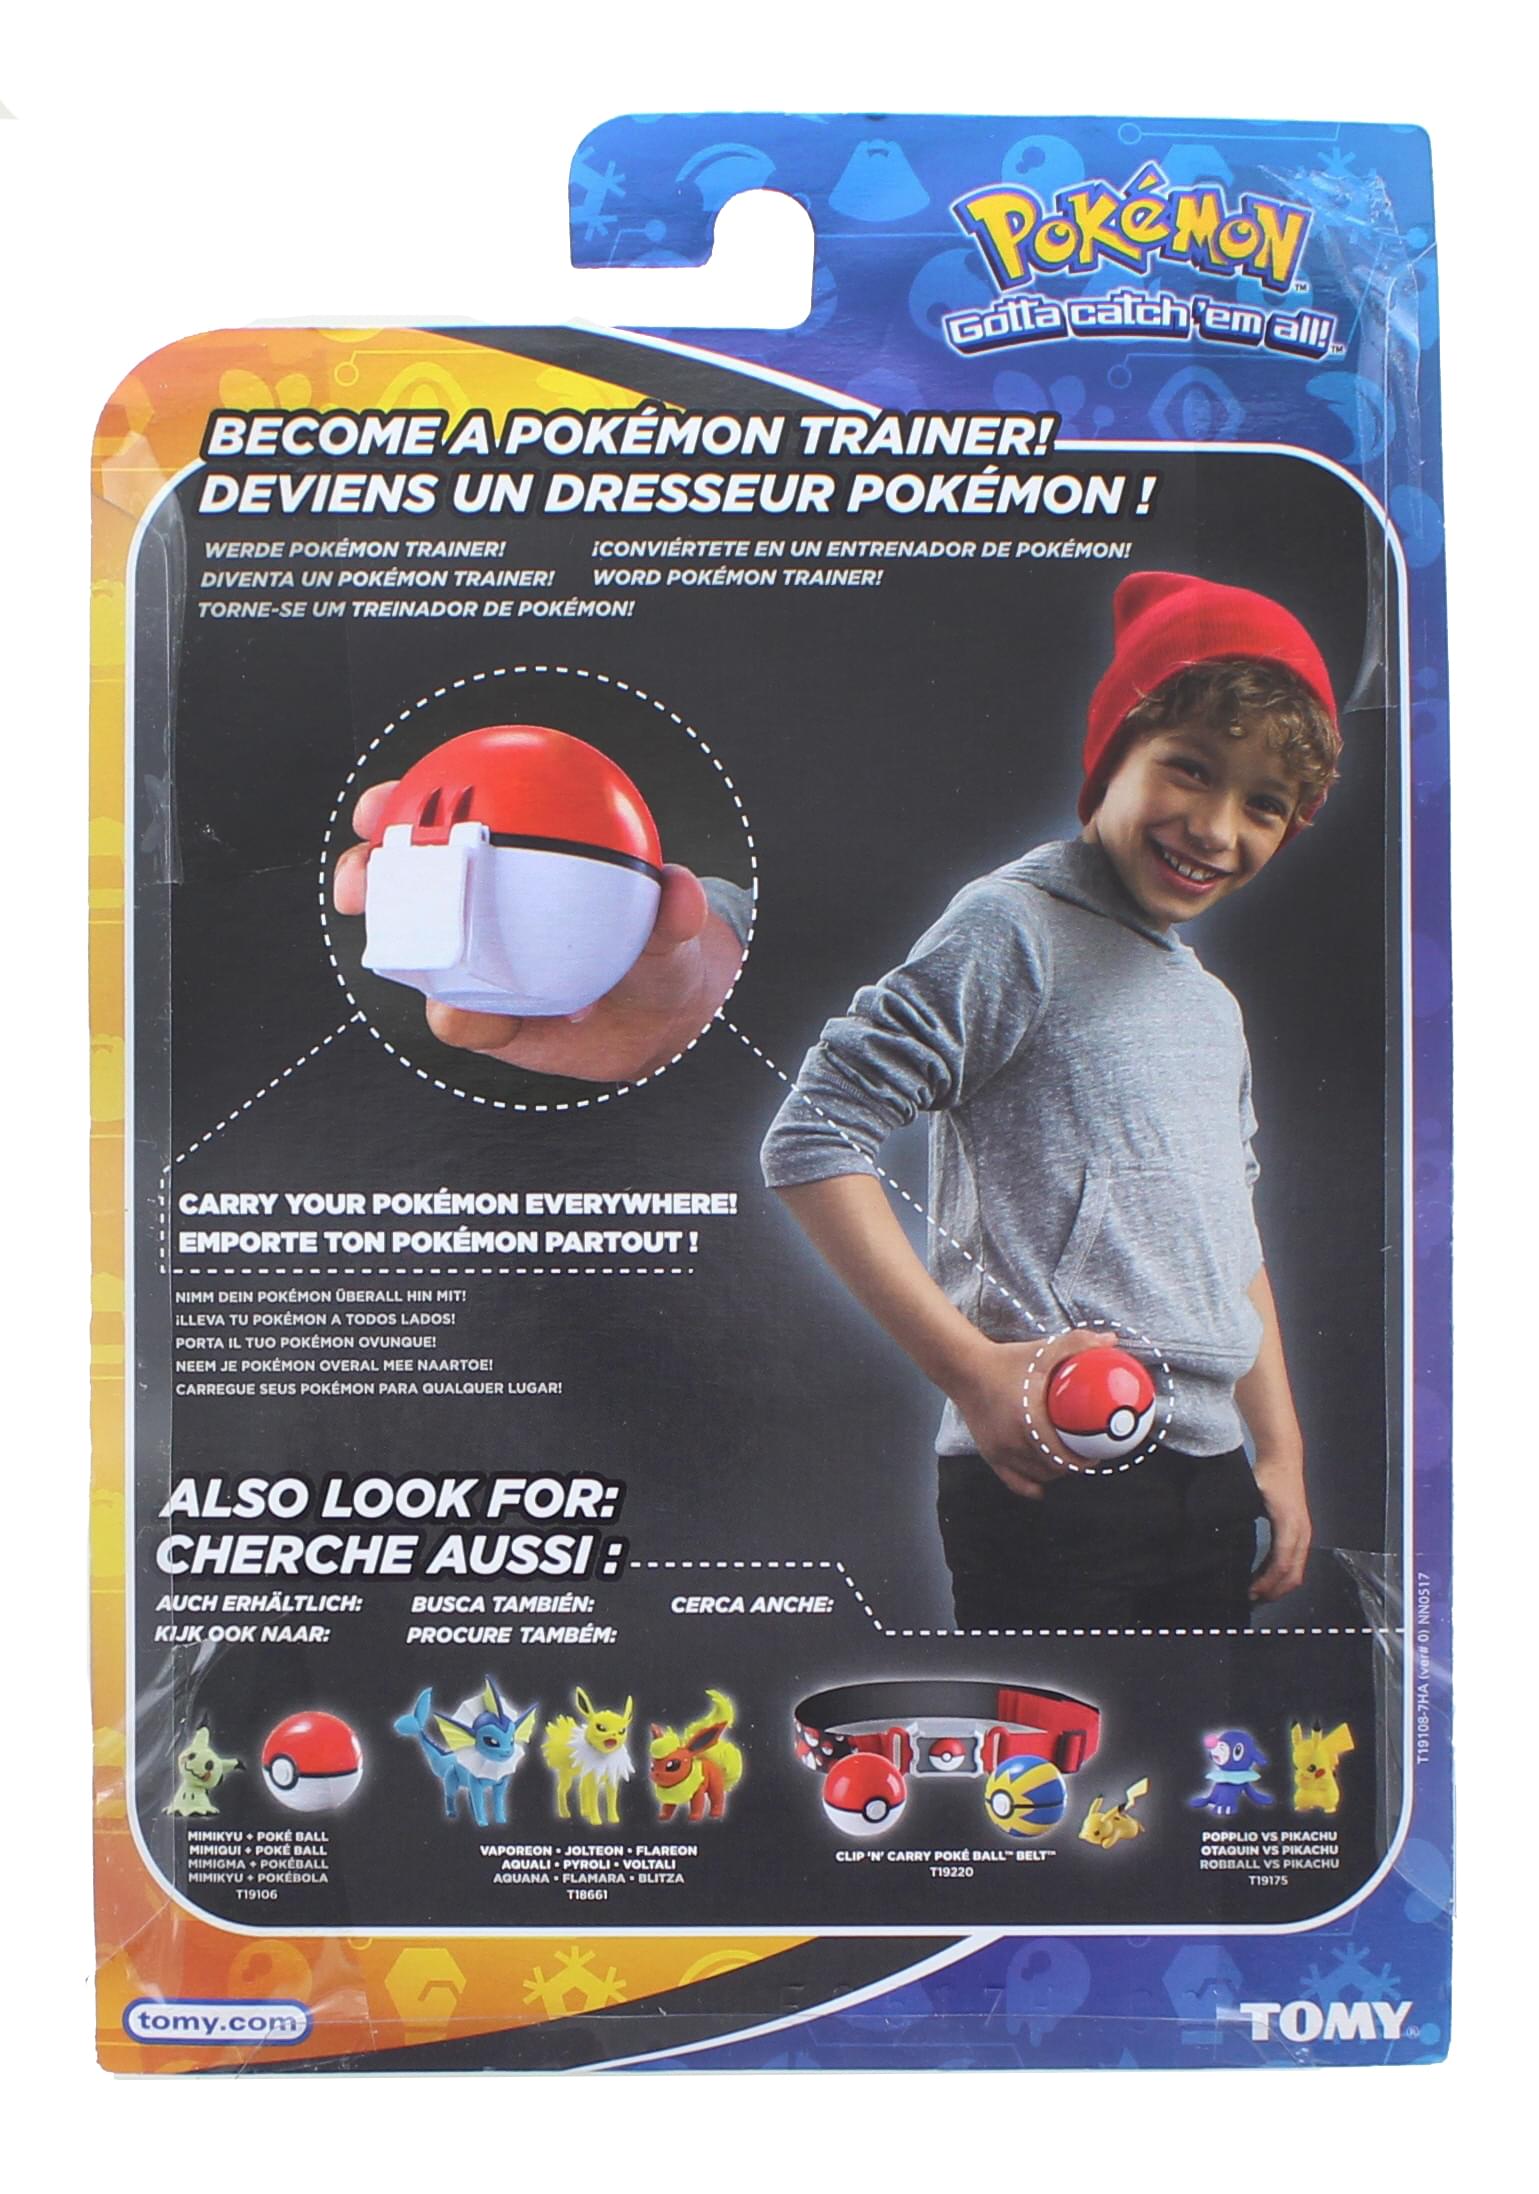 Pokemon Clip and Carry Poke Ball | 2 Inch Mimikyu and Poke Ball